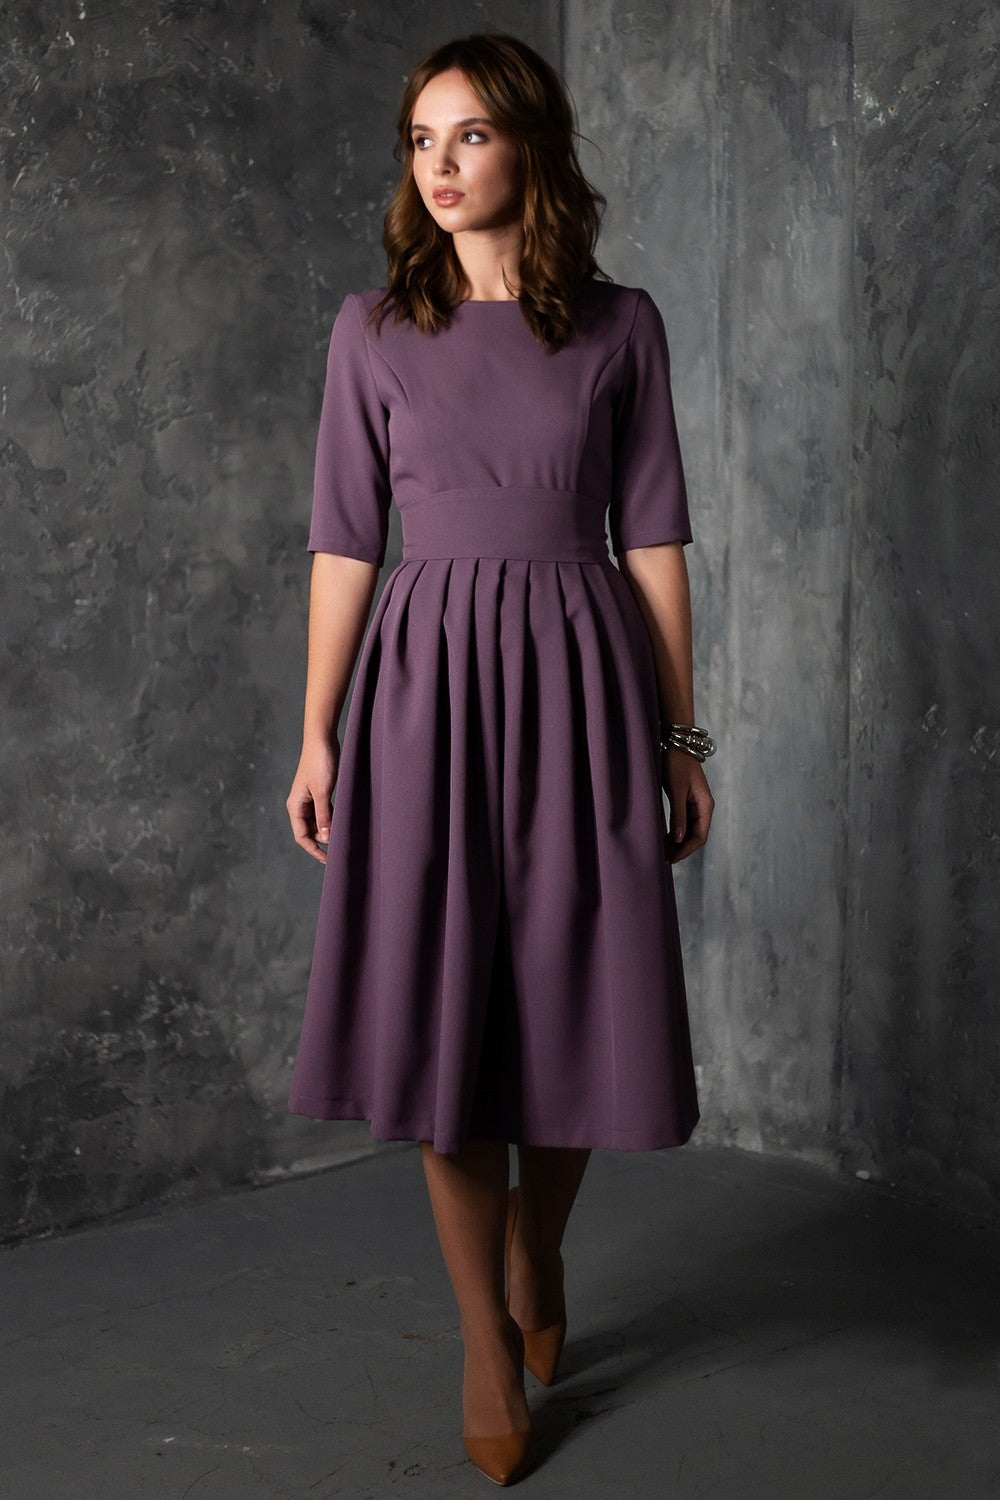 Grey purple dress with pleats